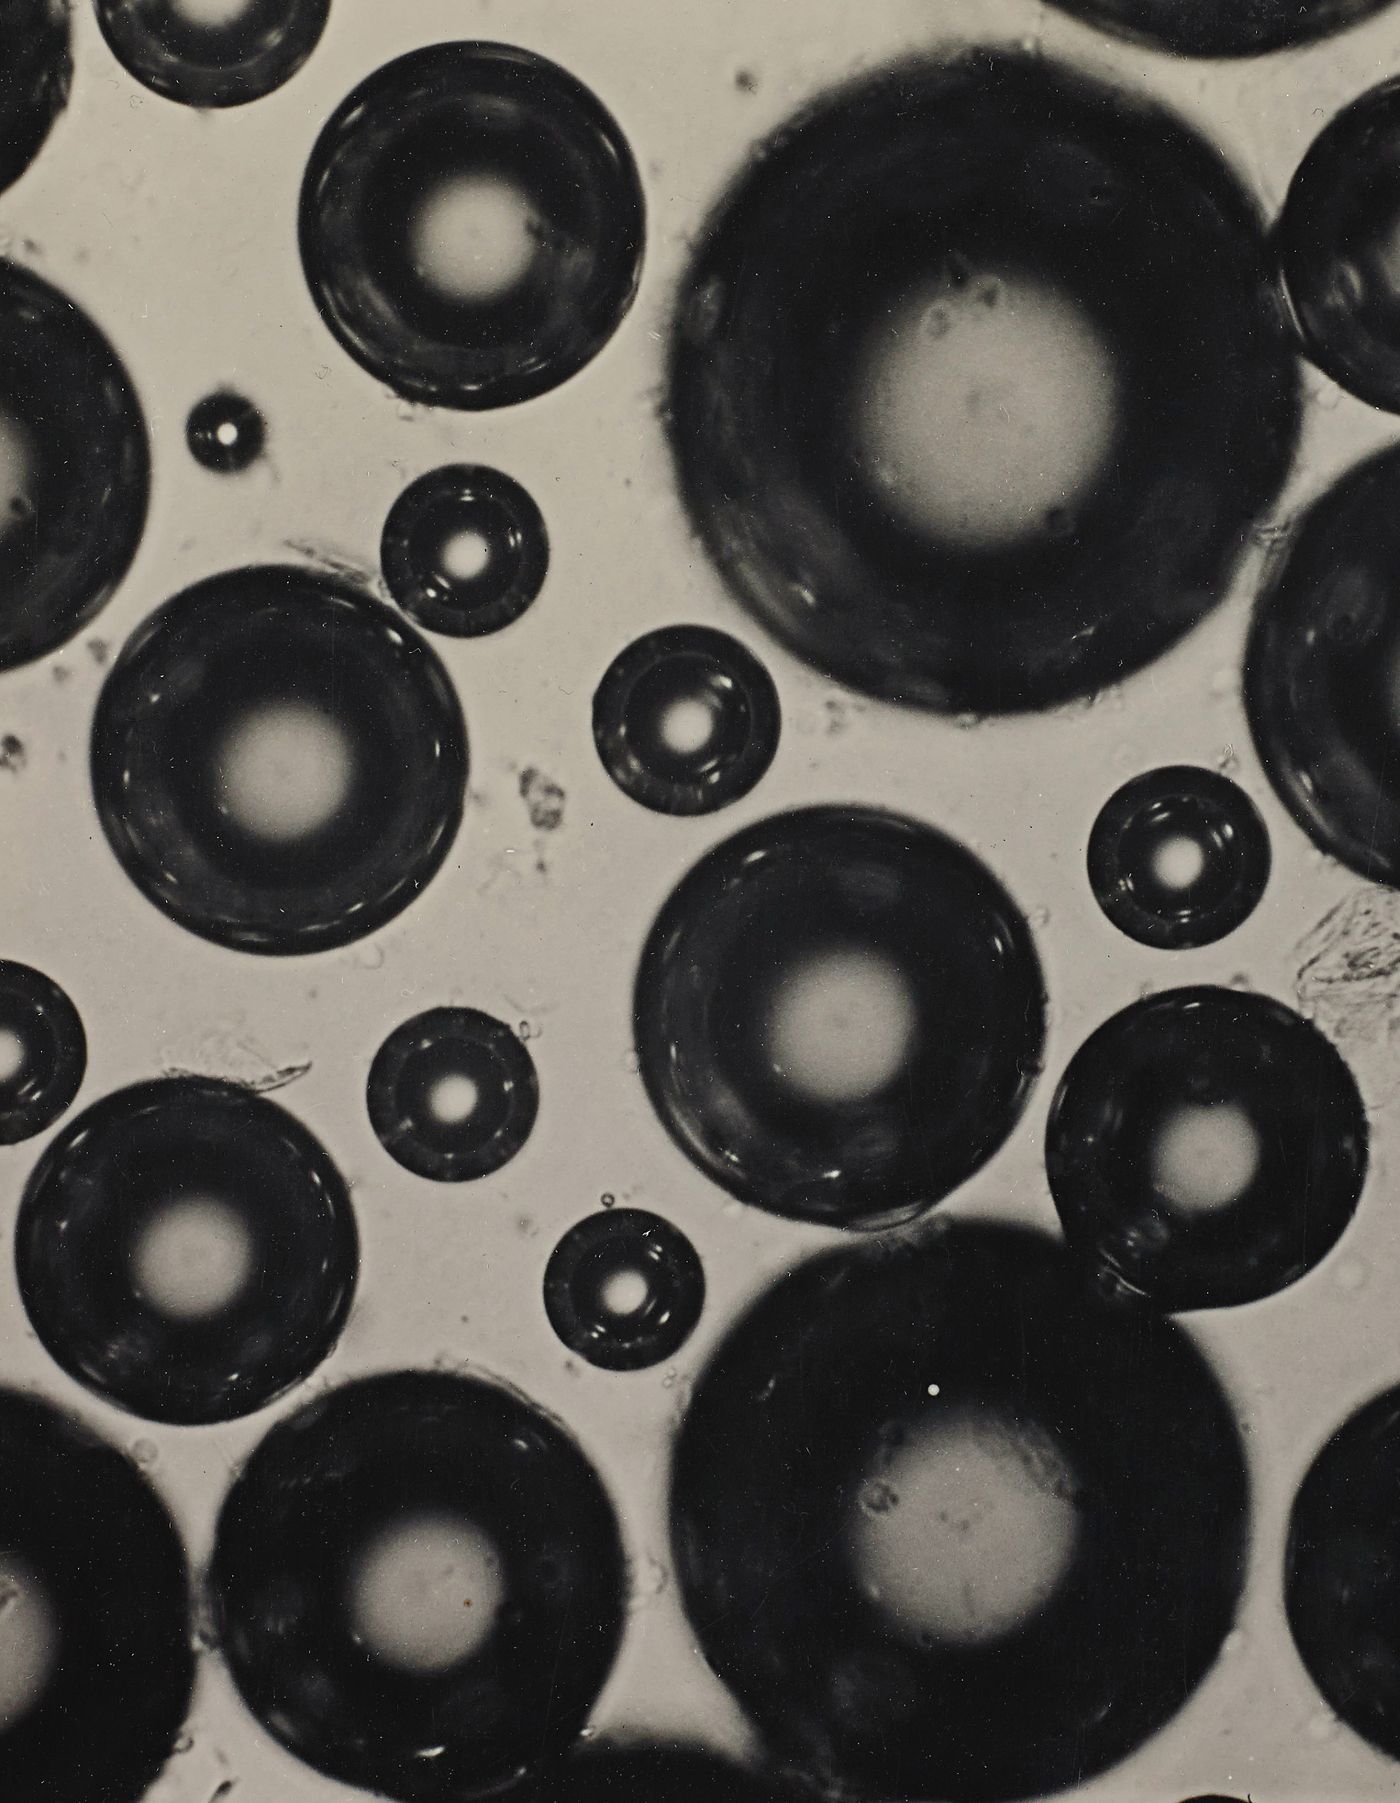 imre kinszki, human saliva 200x micro-photograph, gelatin silver print, c. 1930 - 1935; (17.9 cm x 18.9 cm) private collection